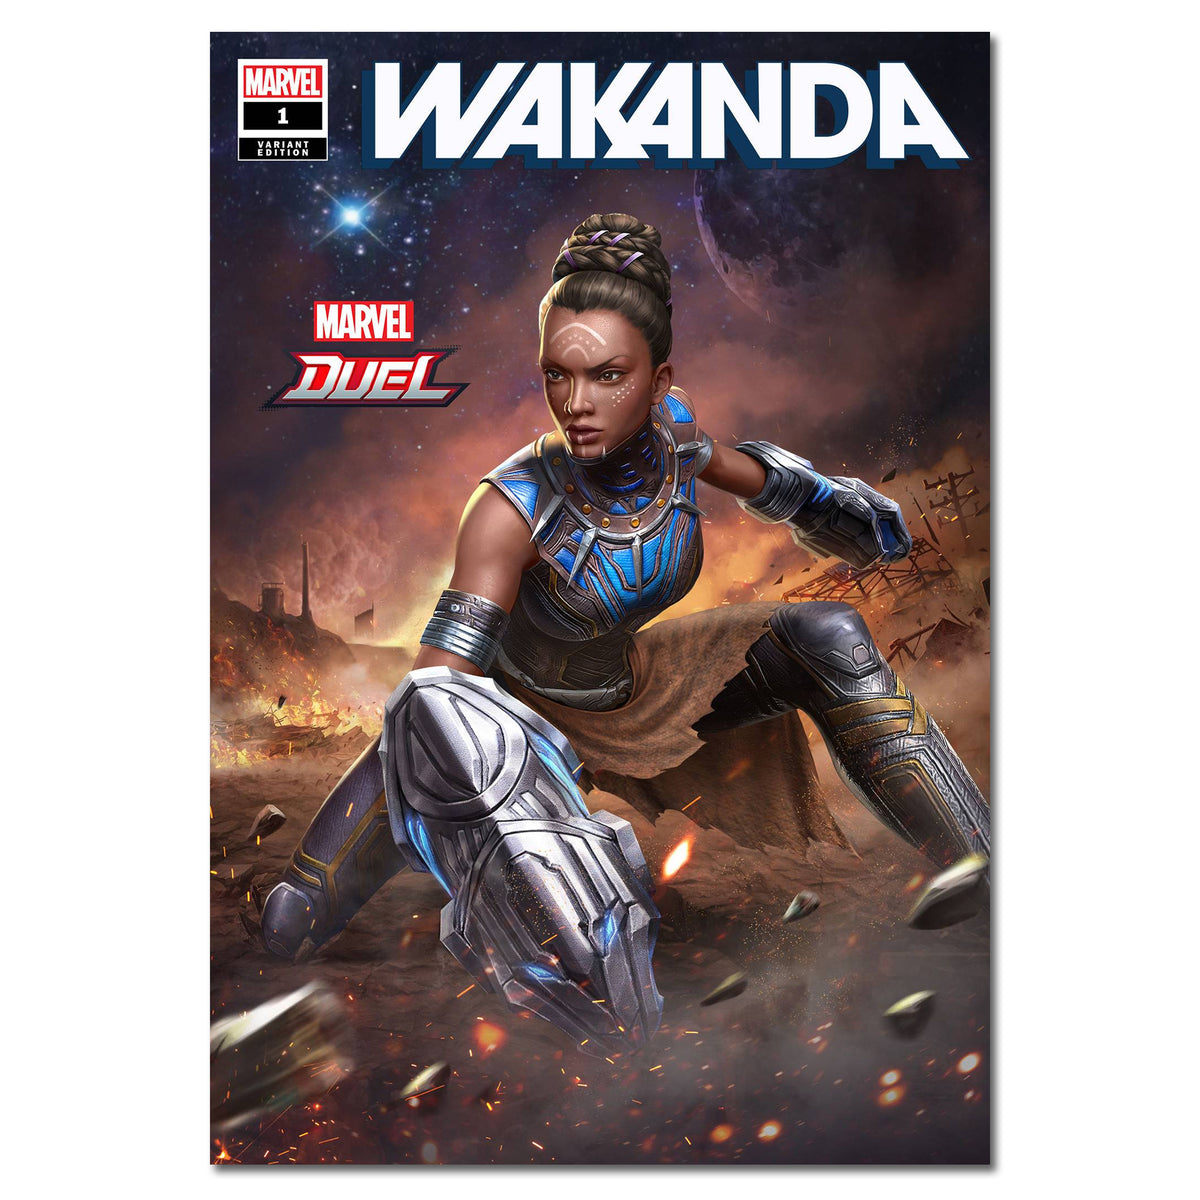 Wakanda #1 (of 5) Cover Variant NETEASE FINALSALE